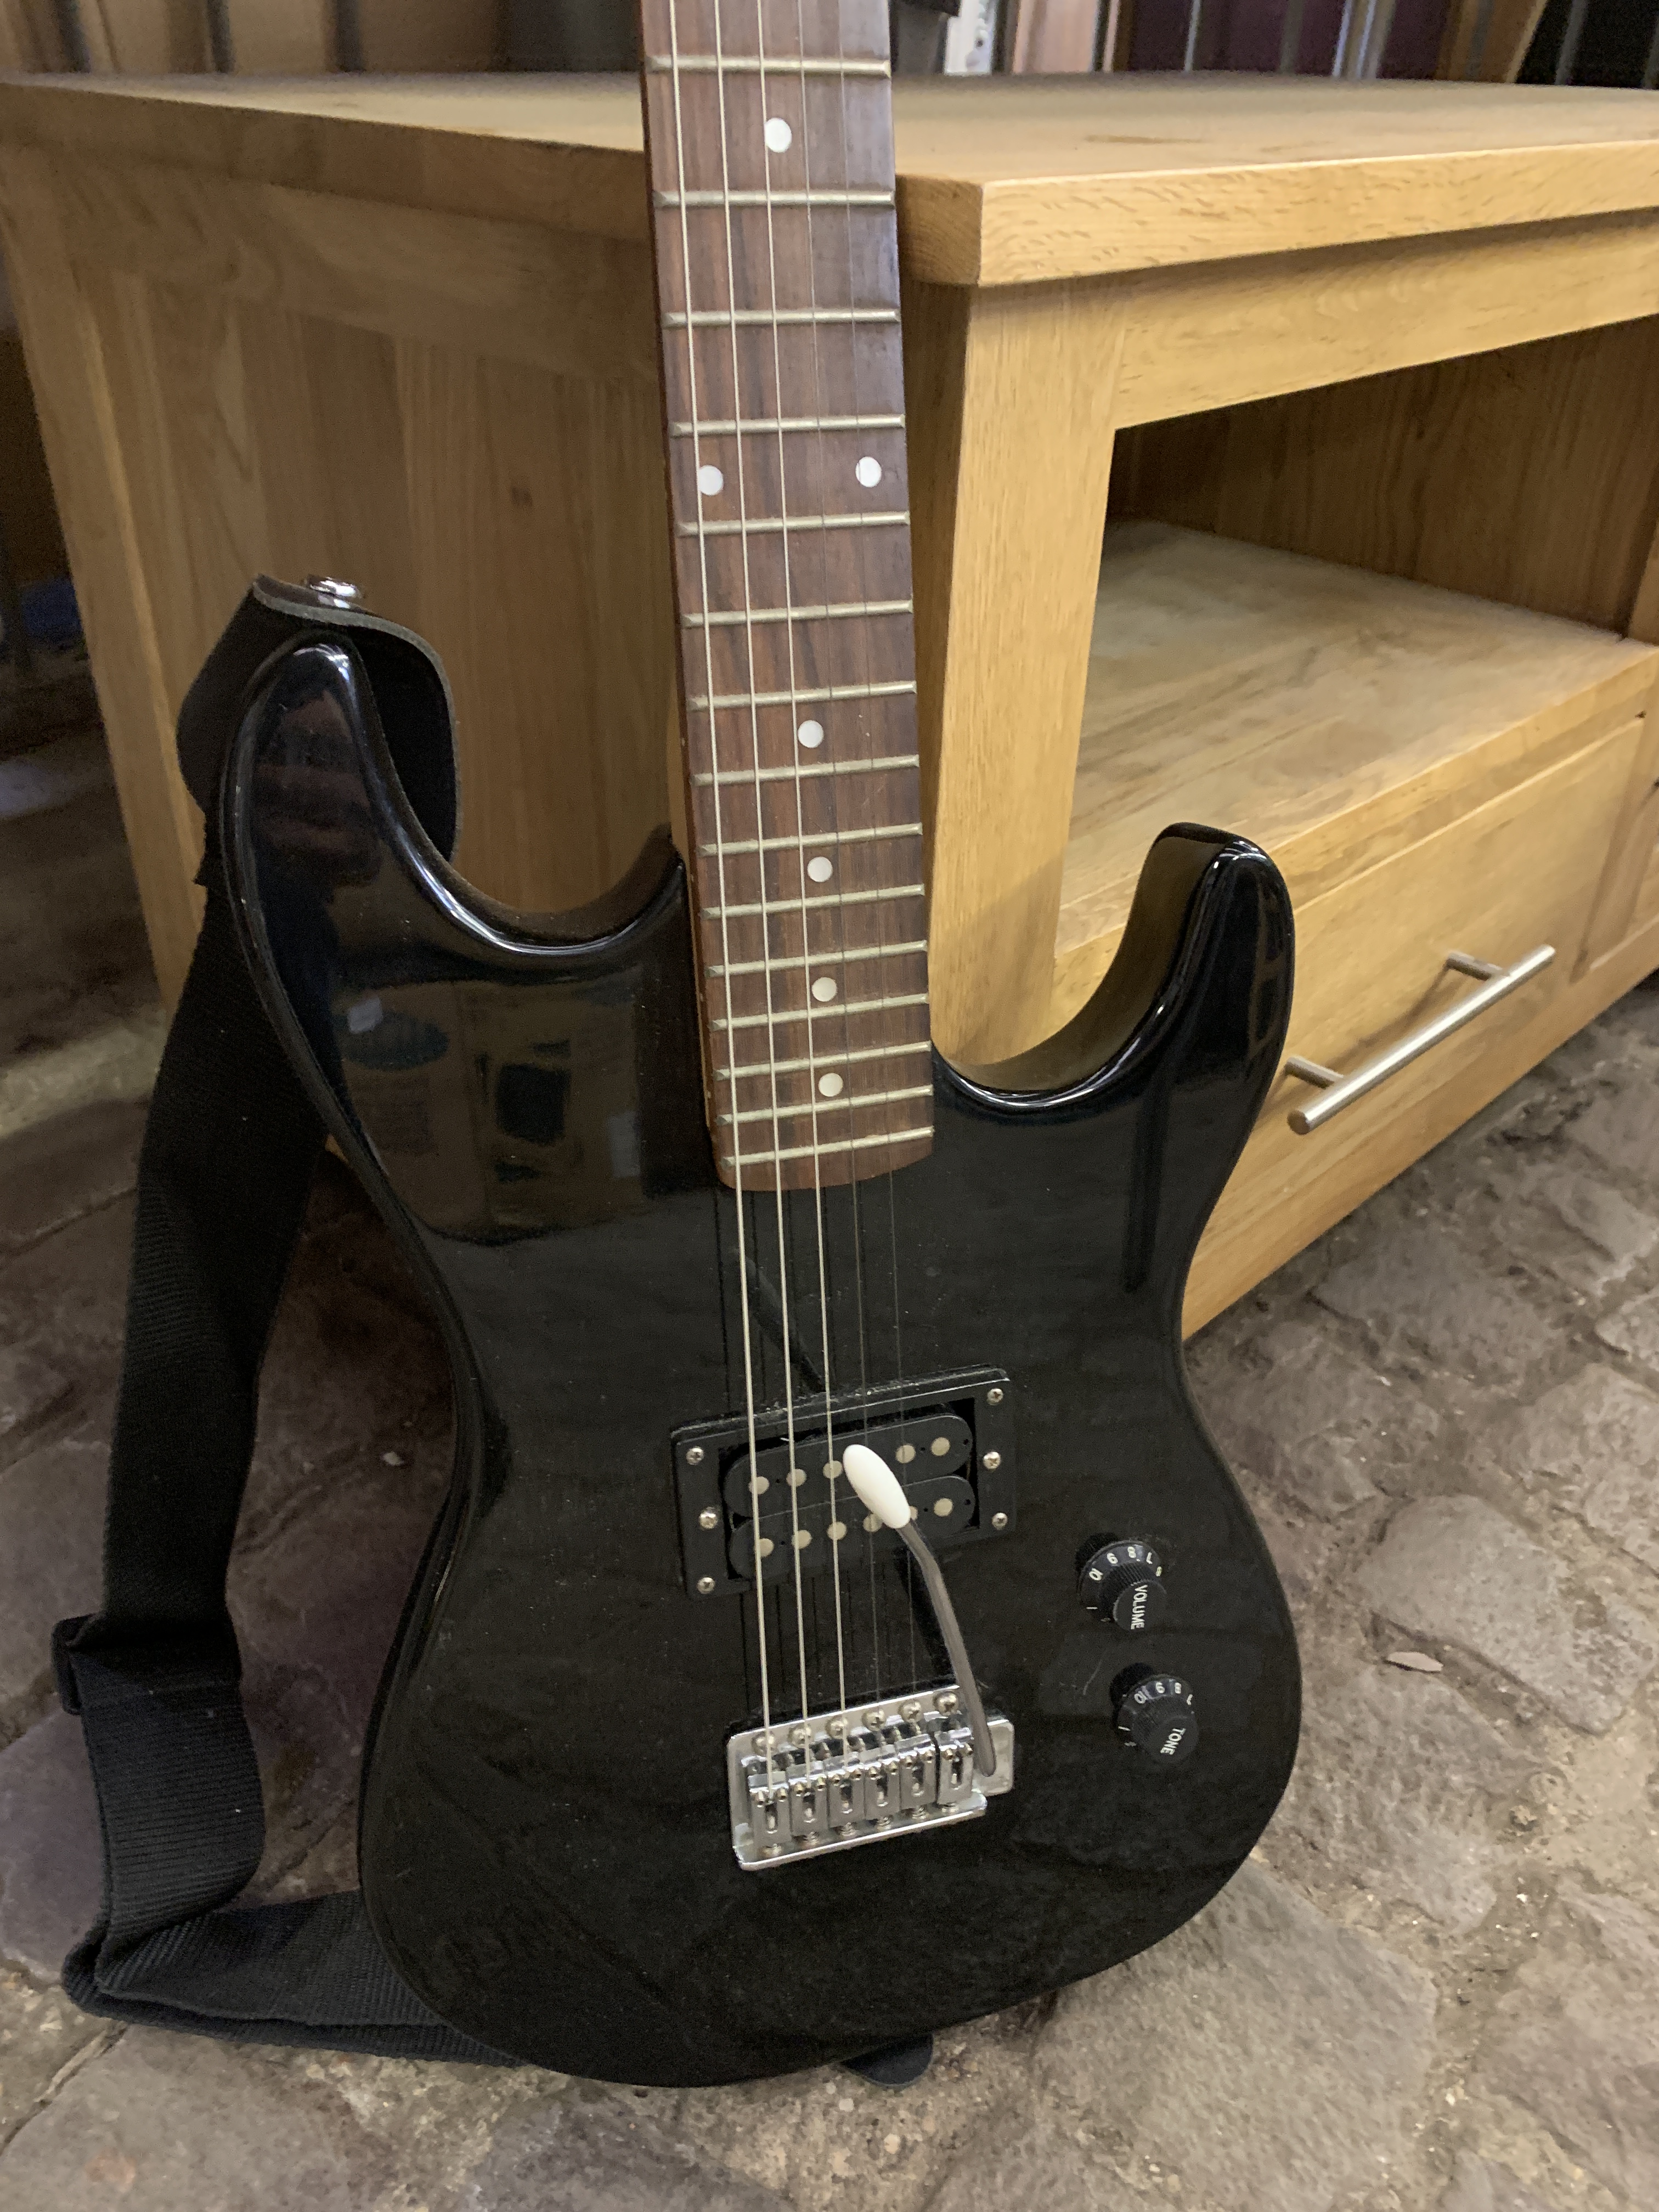 Encors (black) electric guitar. - Image 2 of 2